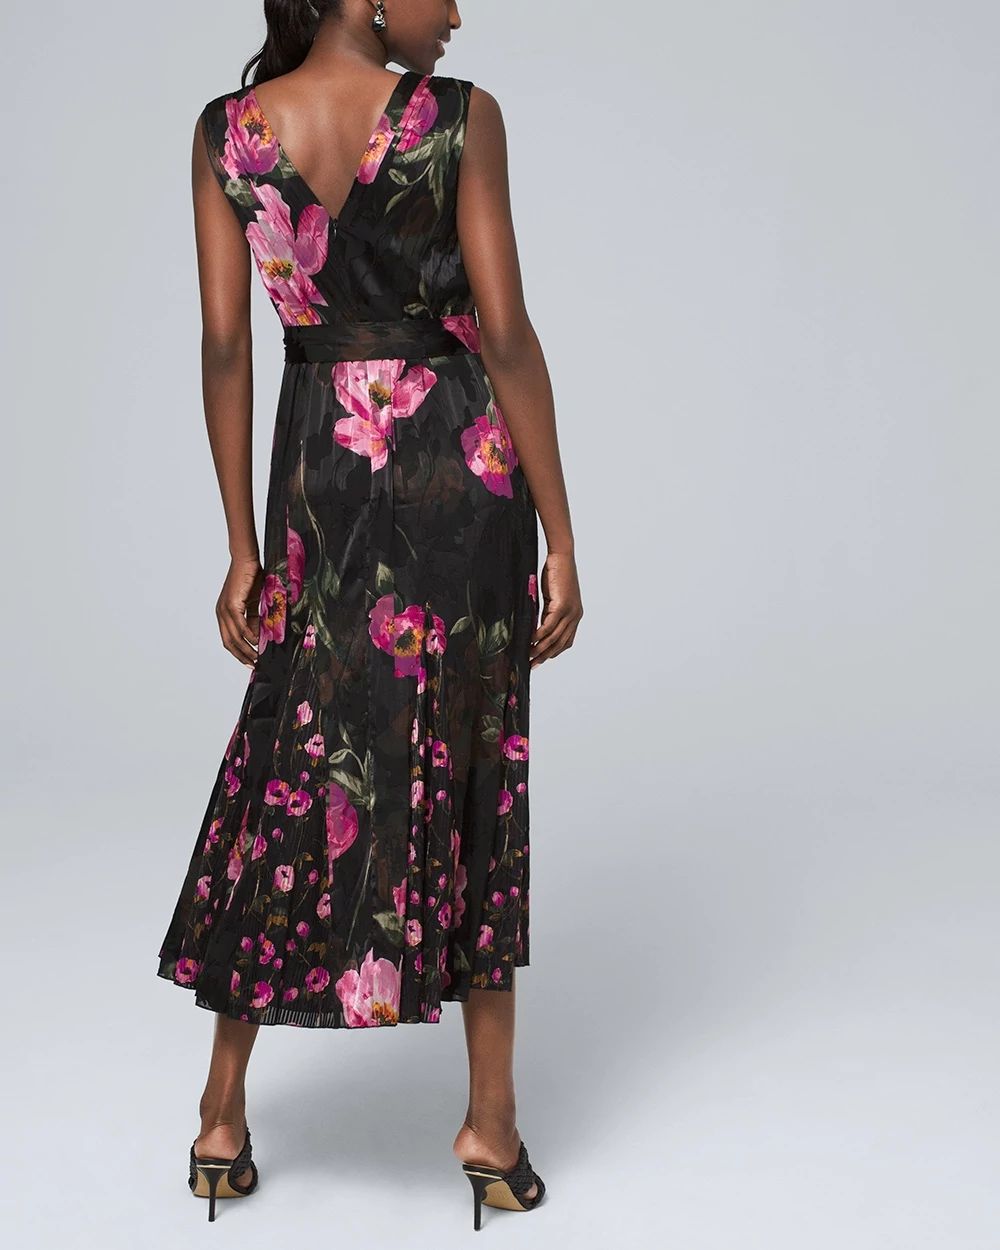 Floral Burnout Midi Dress click to view larger image.